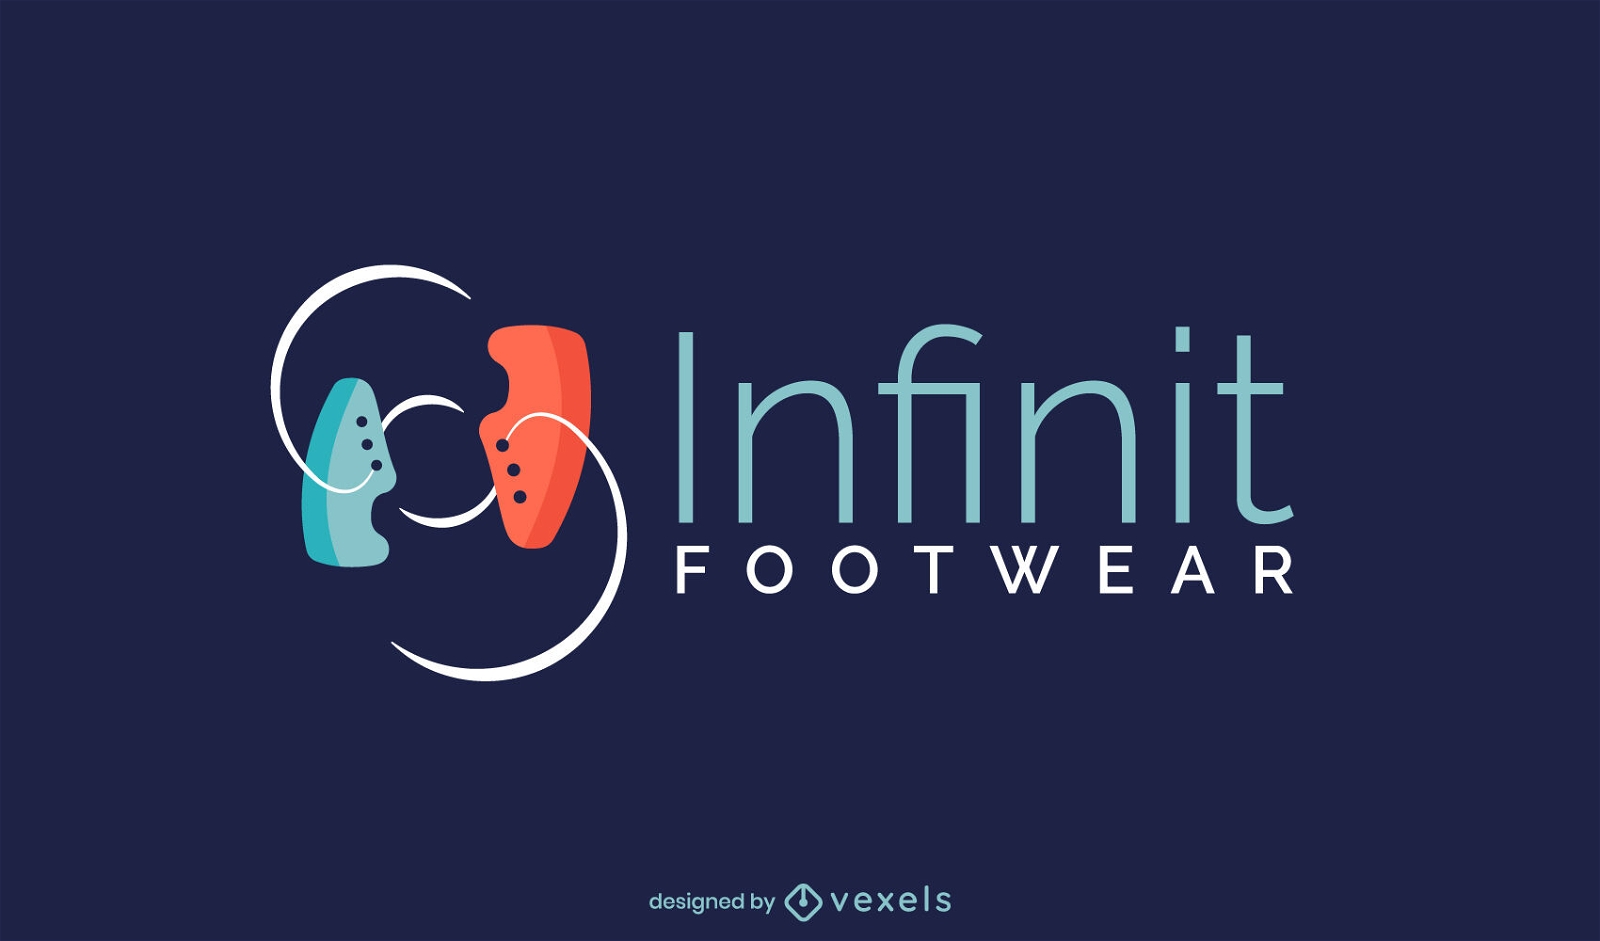 Shoes company logo template